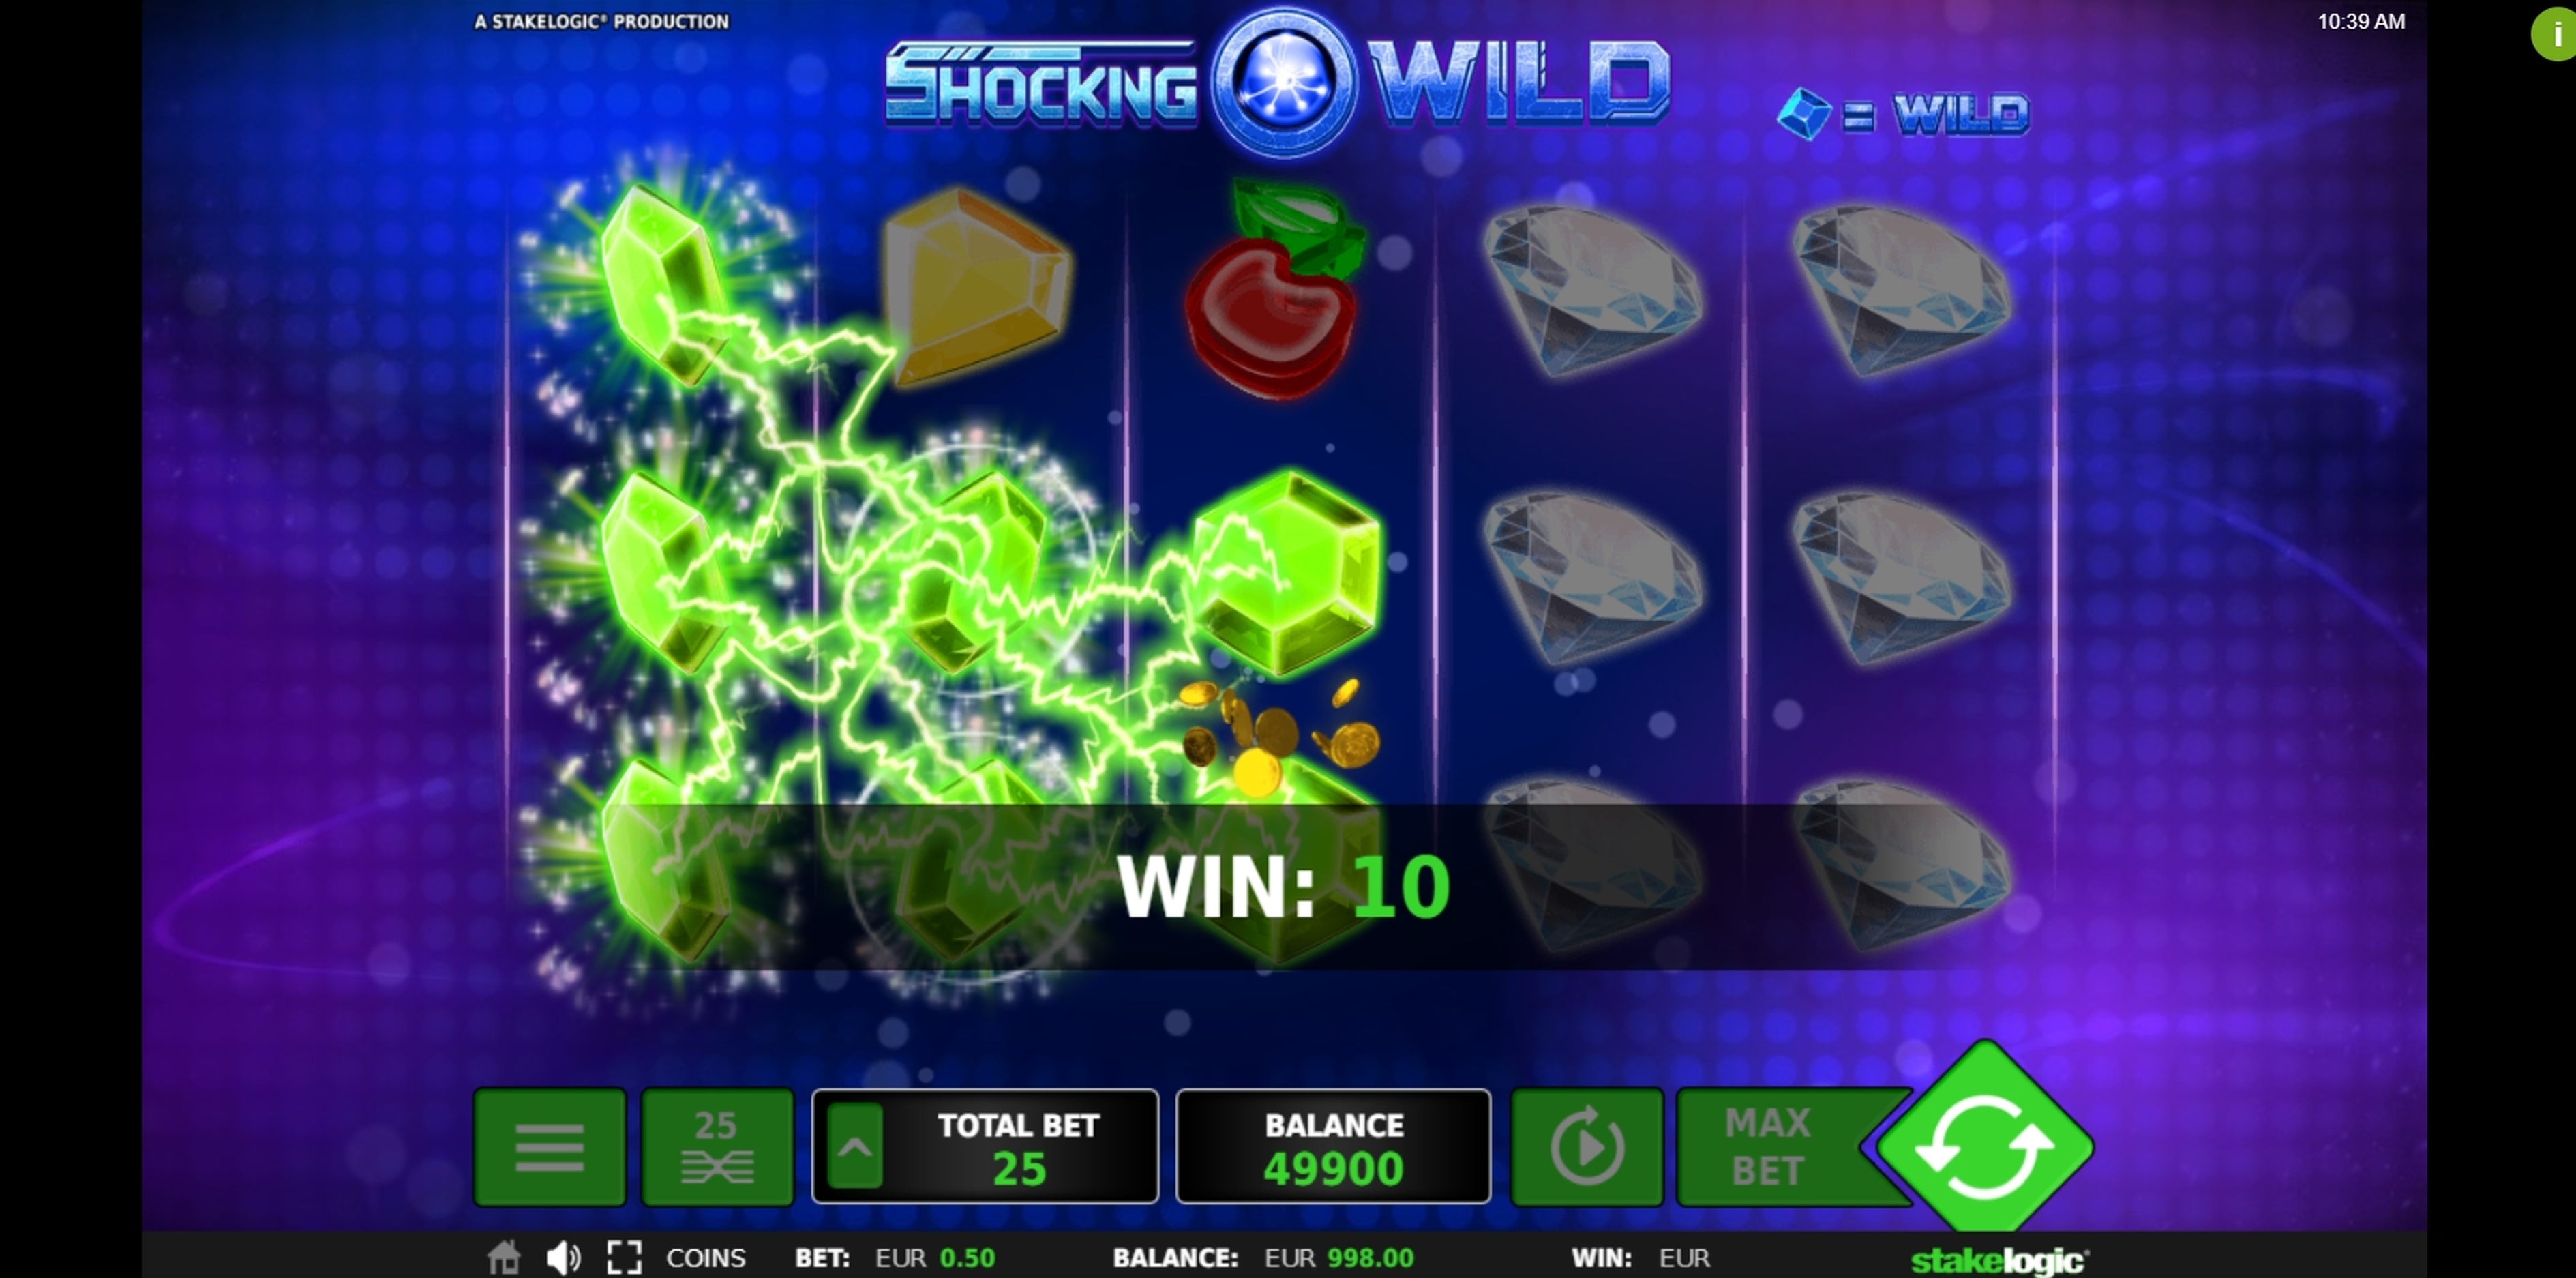 Win Money in Shocking Wild Free Slot Game by Stakelogic